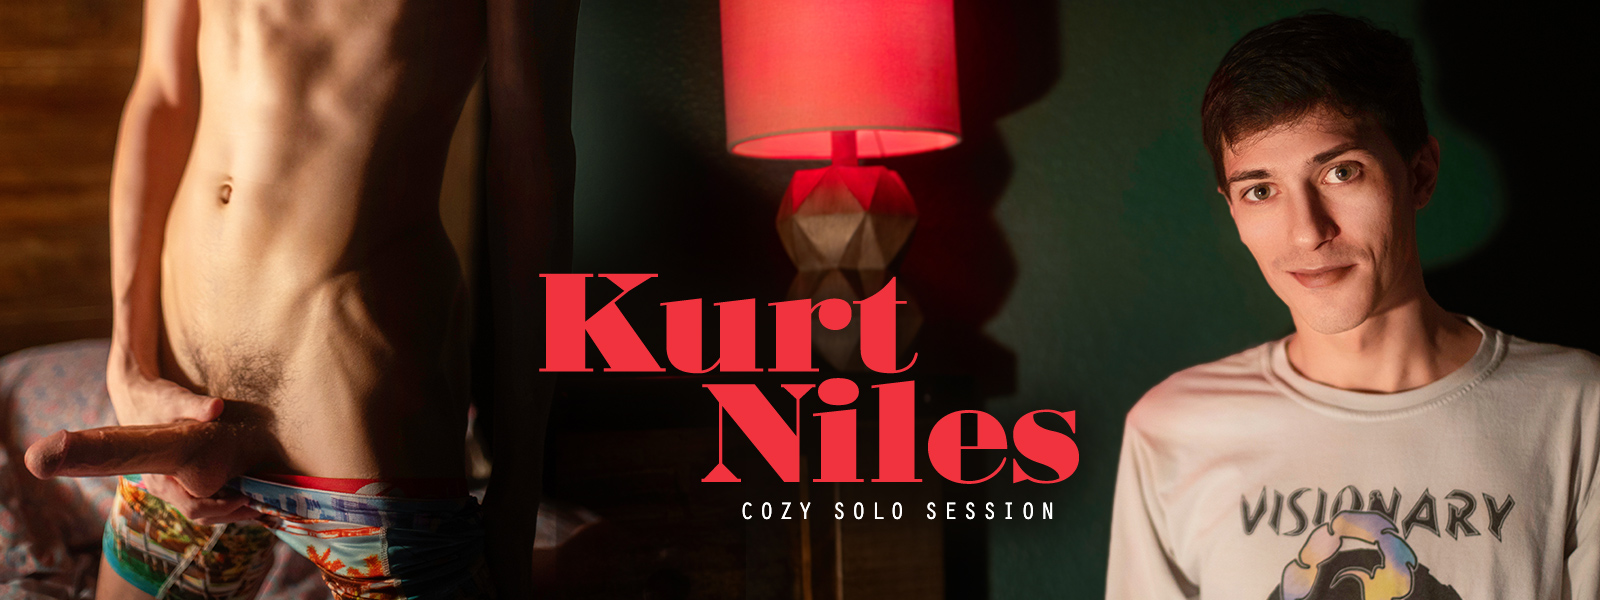 Kurt Niles Cozy Solo Session